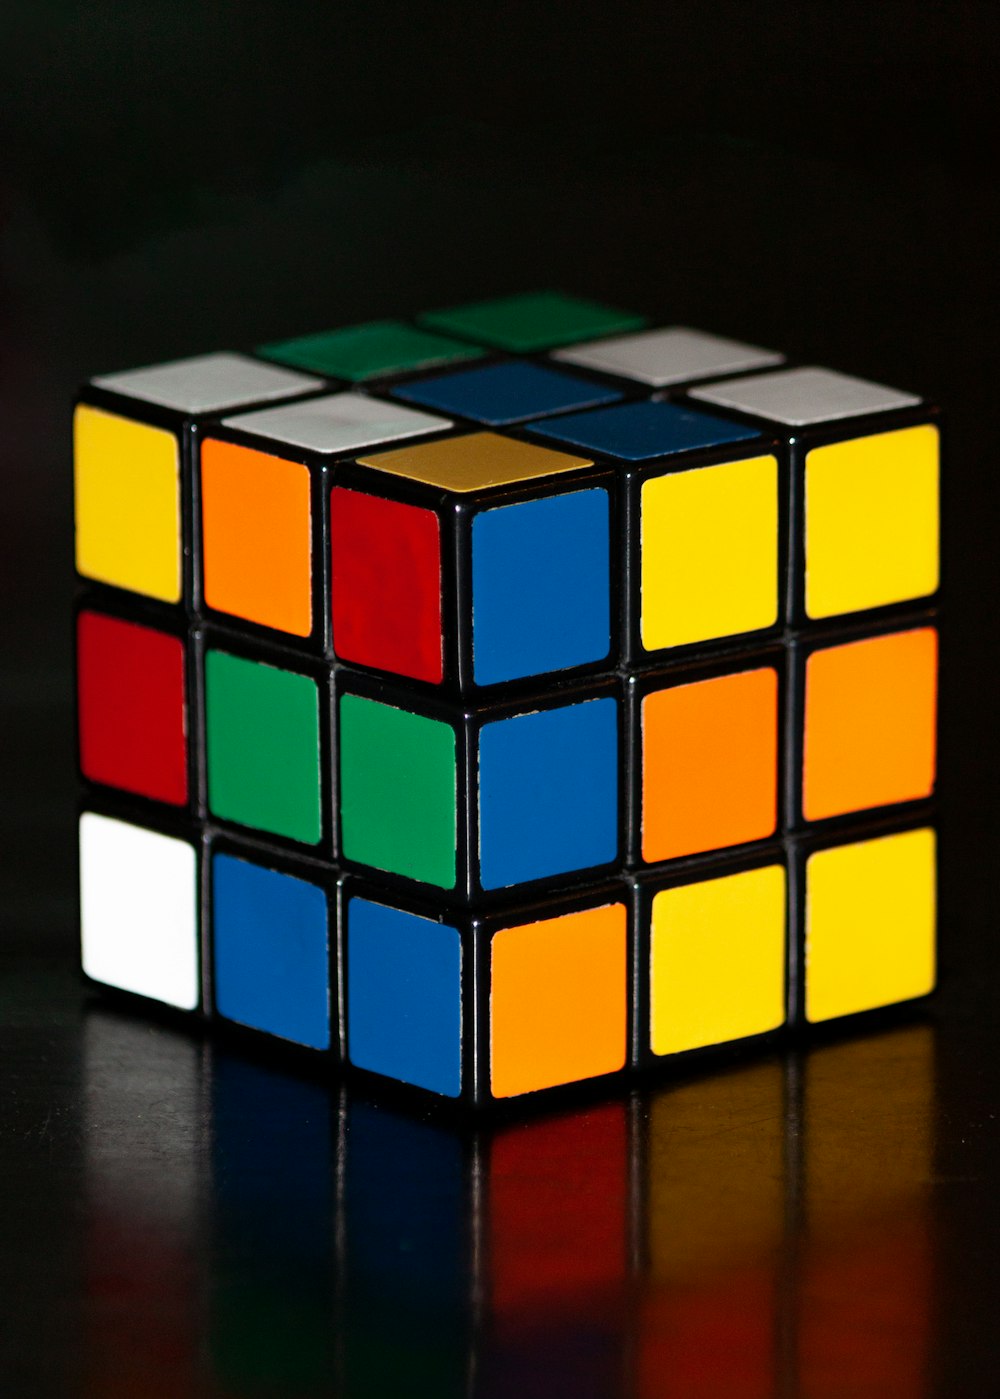 3 x 3 Rubik's Cube on black surface